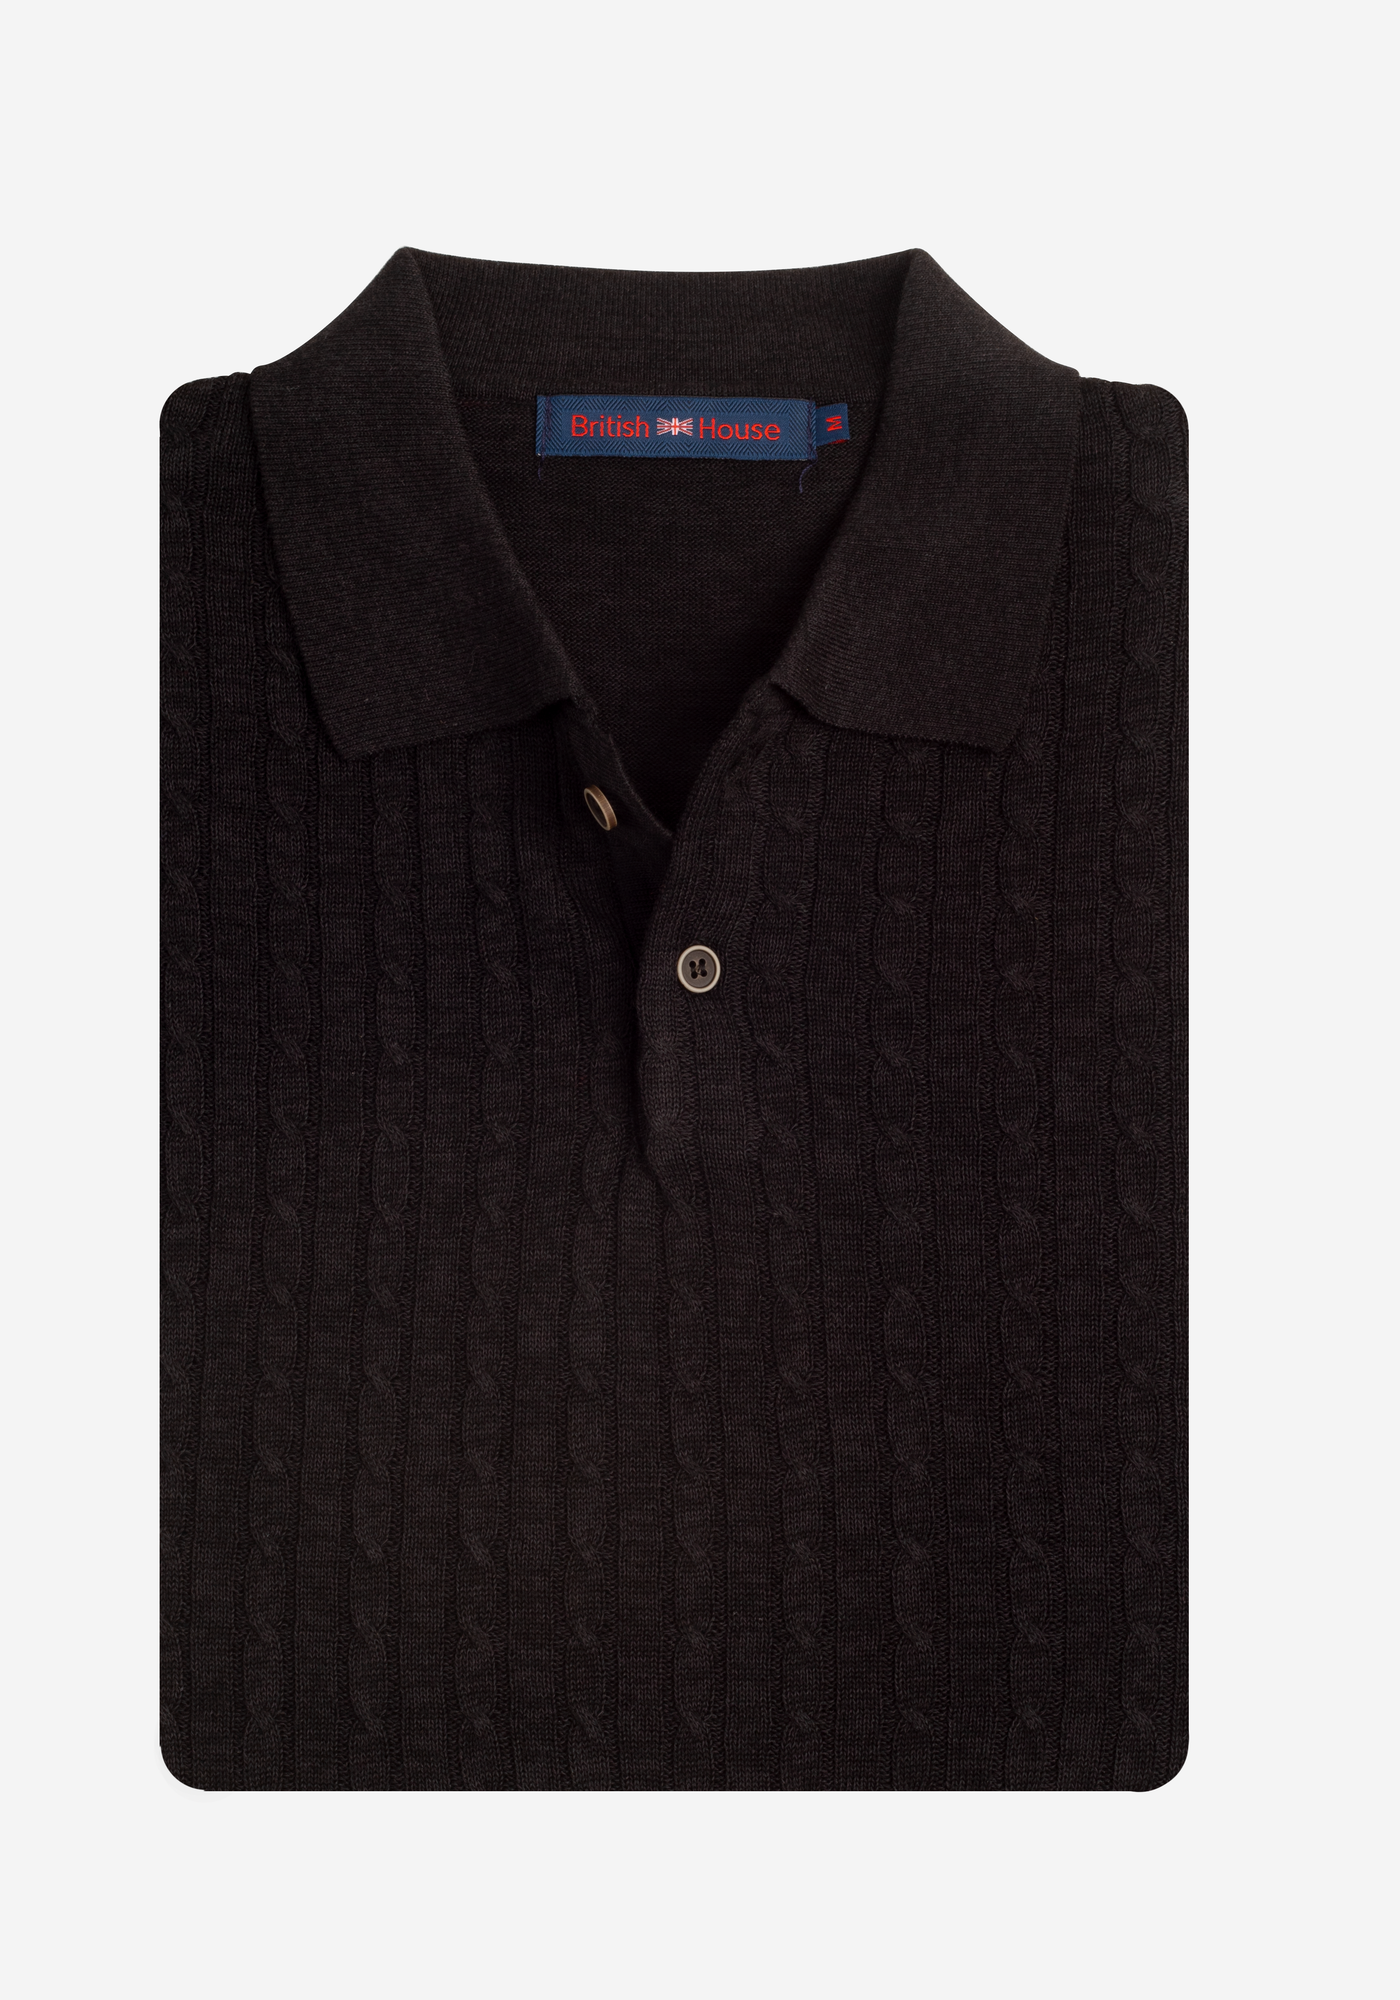 Vanta Black Braided Knitted Polo Shirt